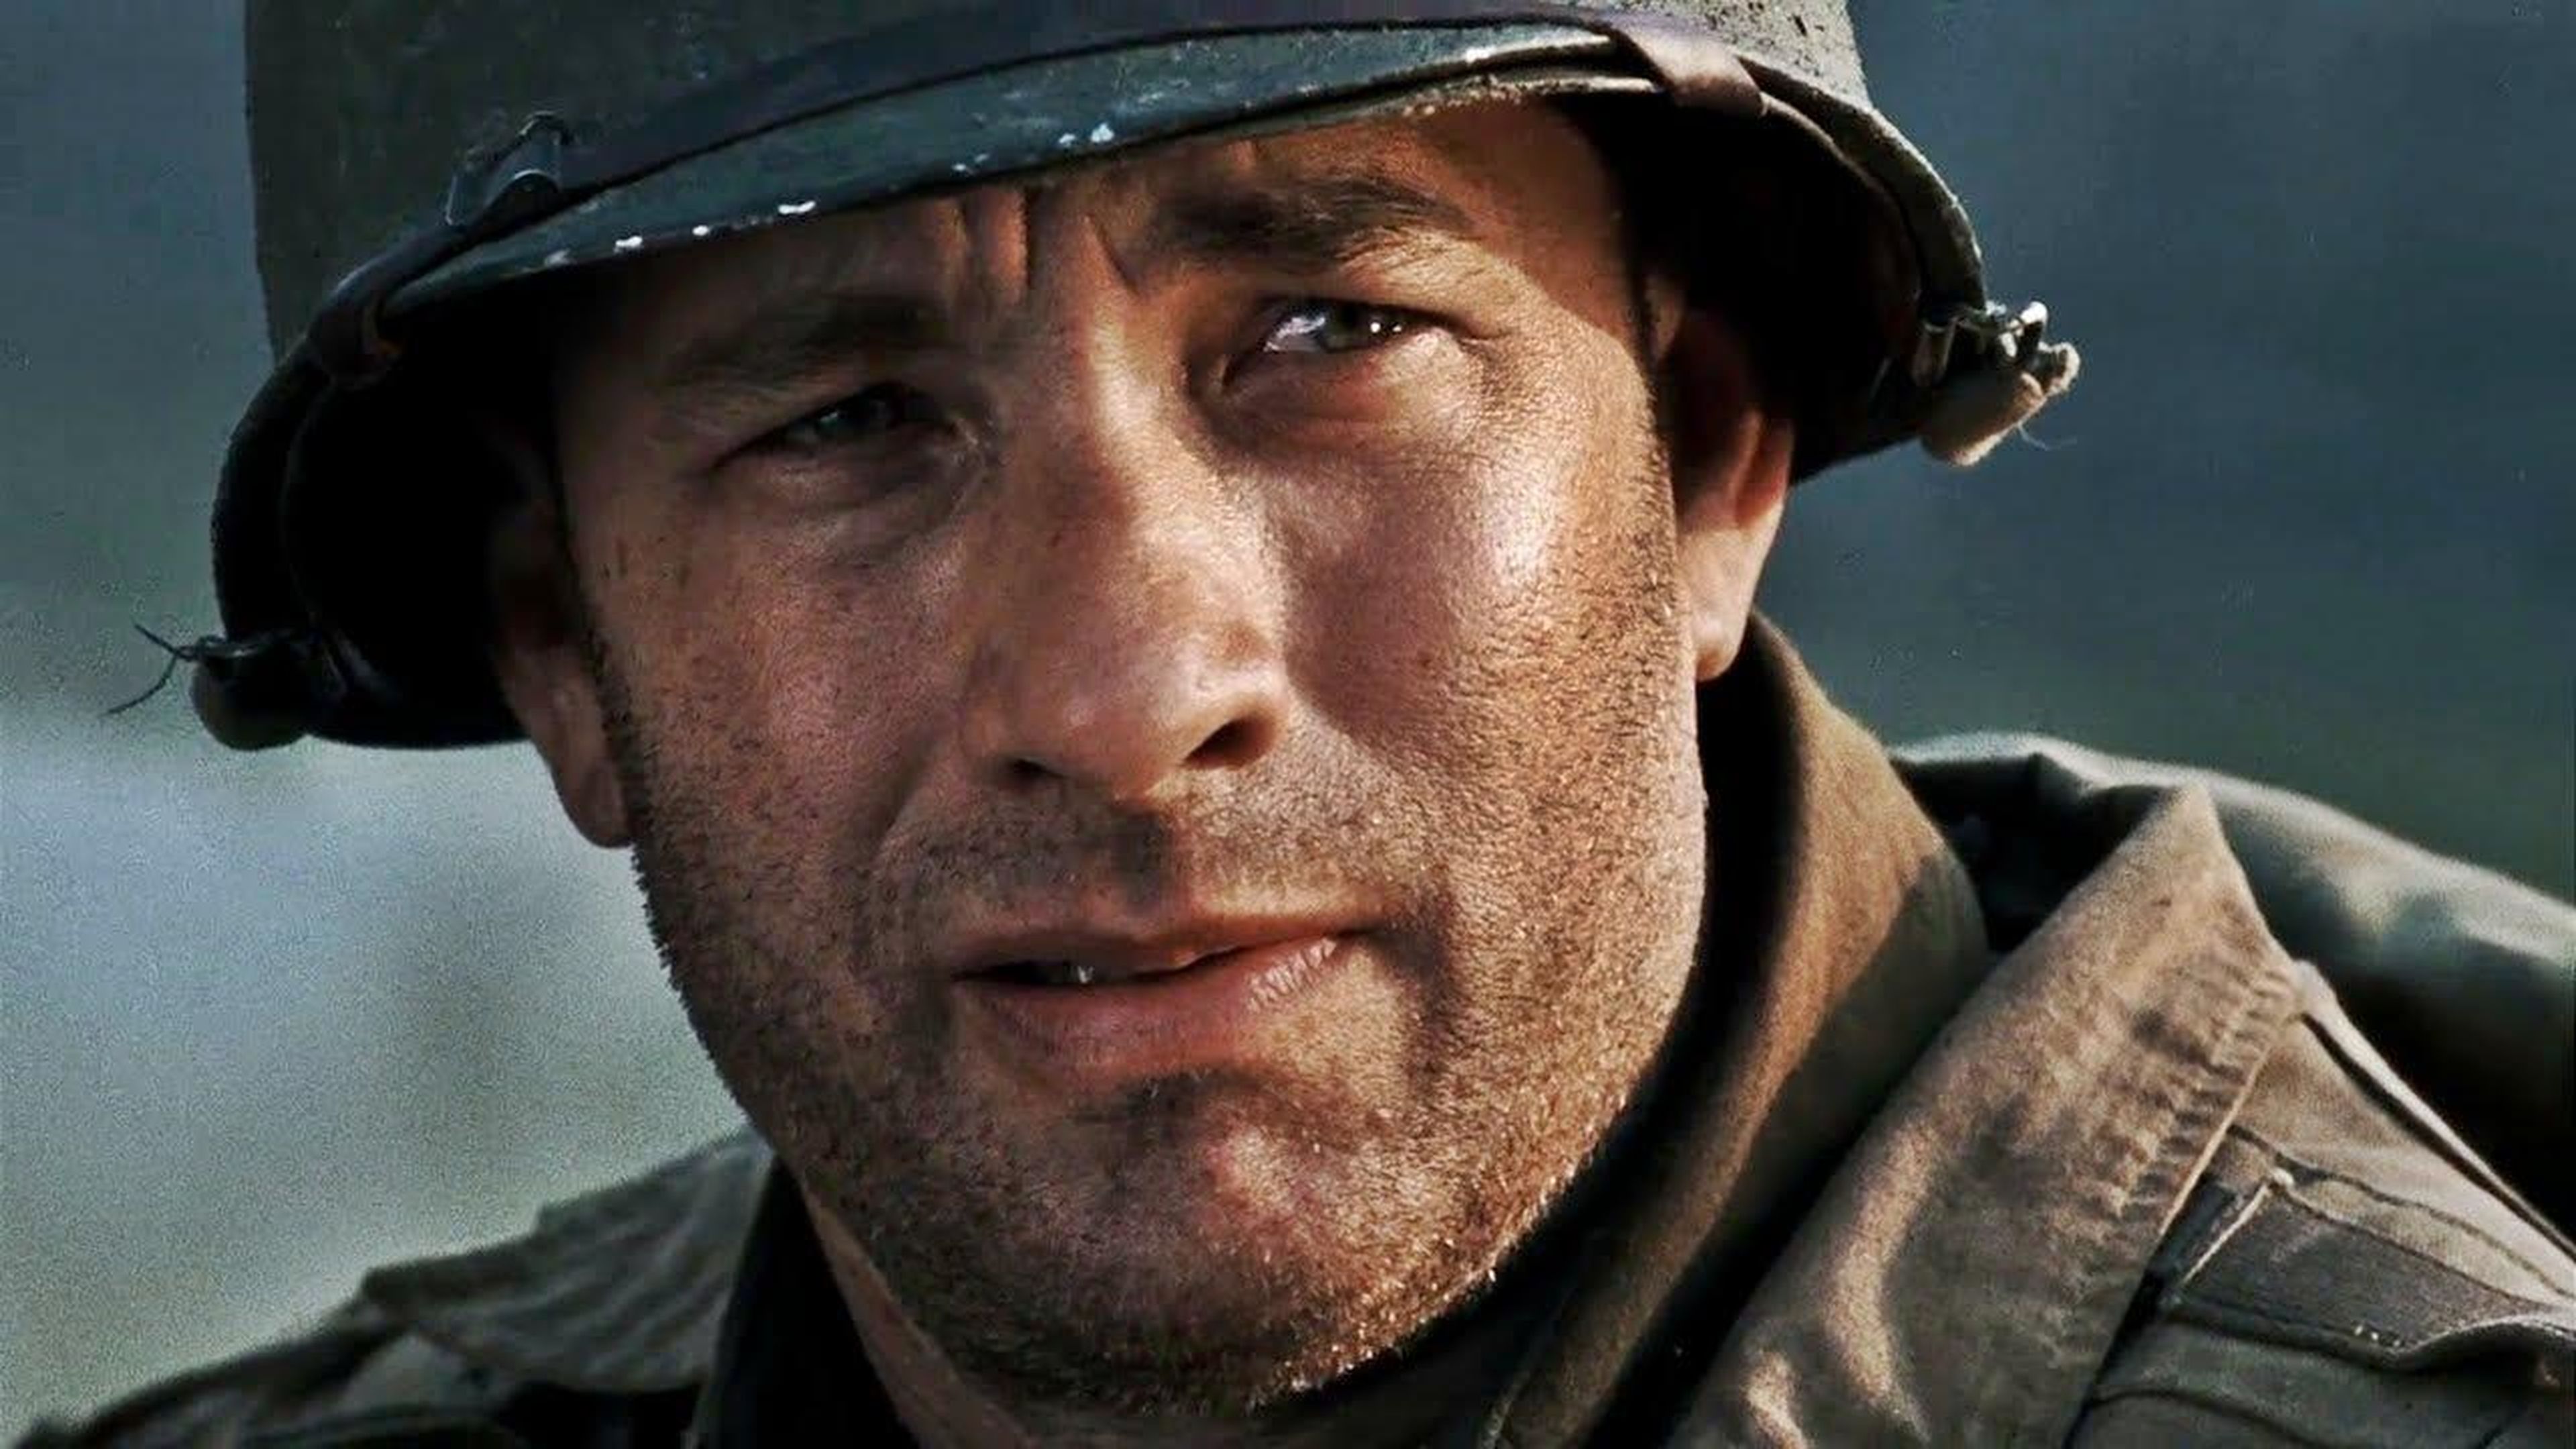 14. Tom Hanks as Captain John Miller in "Saving Private Ryan"